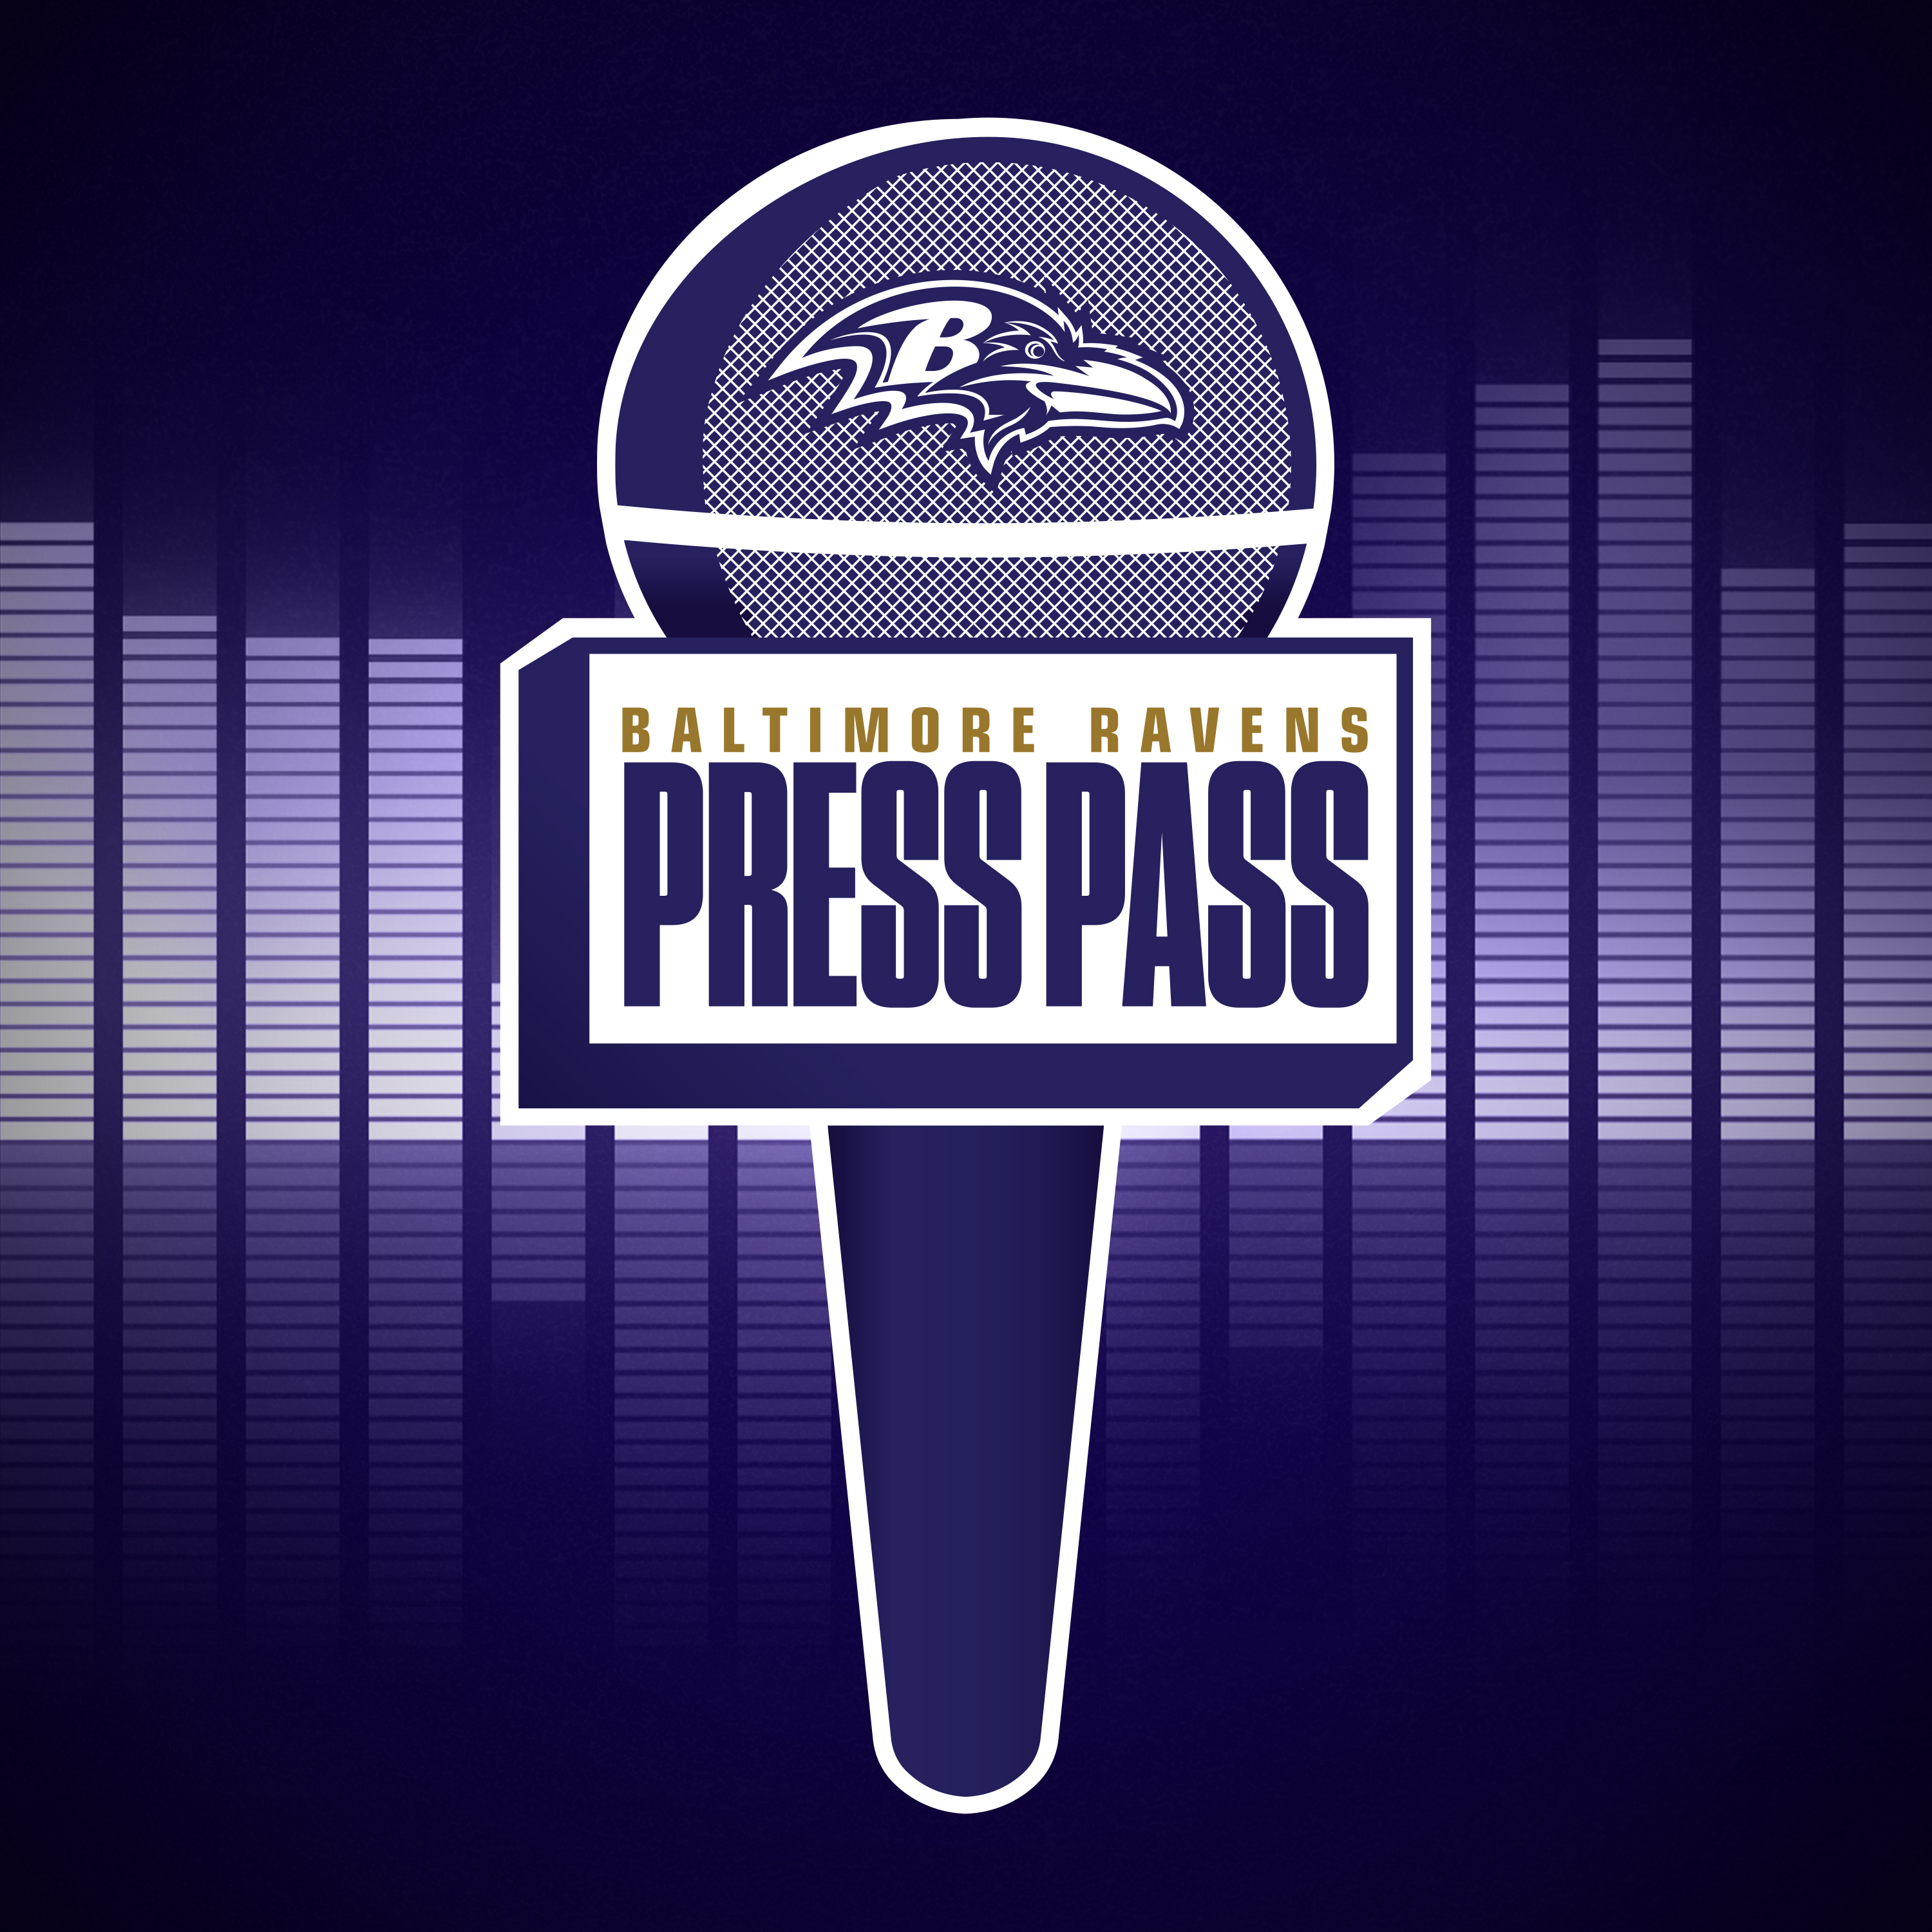 Ravens-Browns Week 4 Postgame Press Conference 10/1